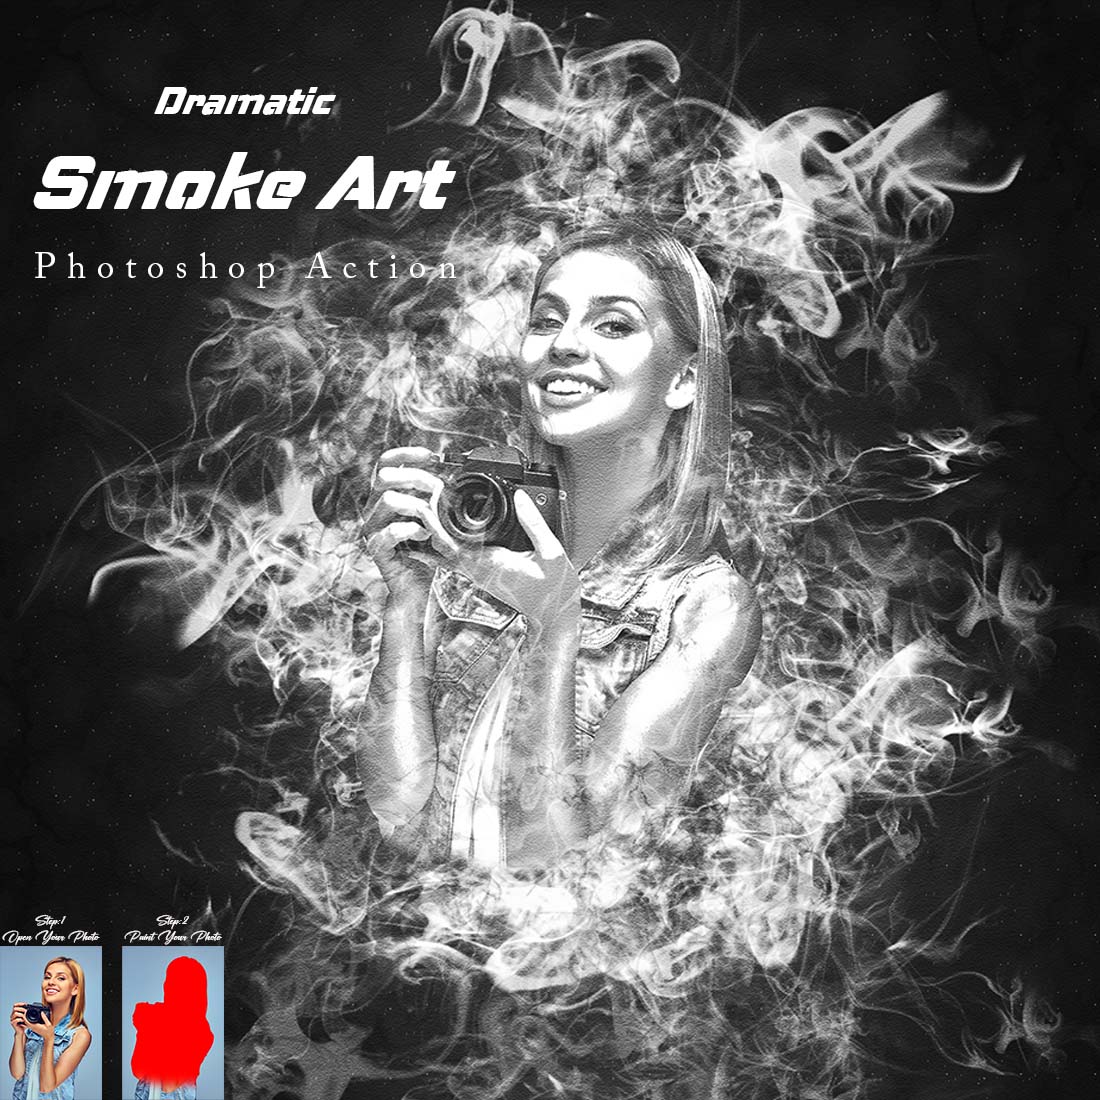 Dramatic Smoke Art Photoshop Action cover image.